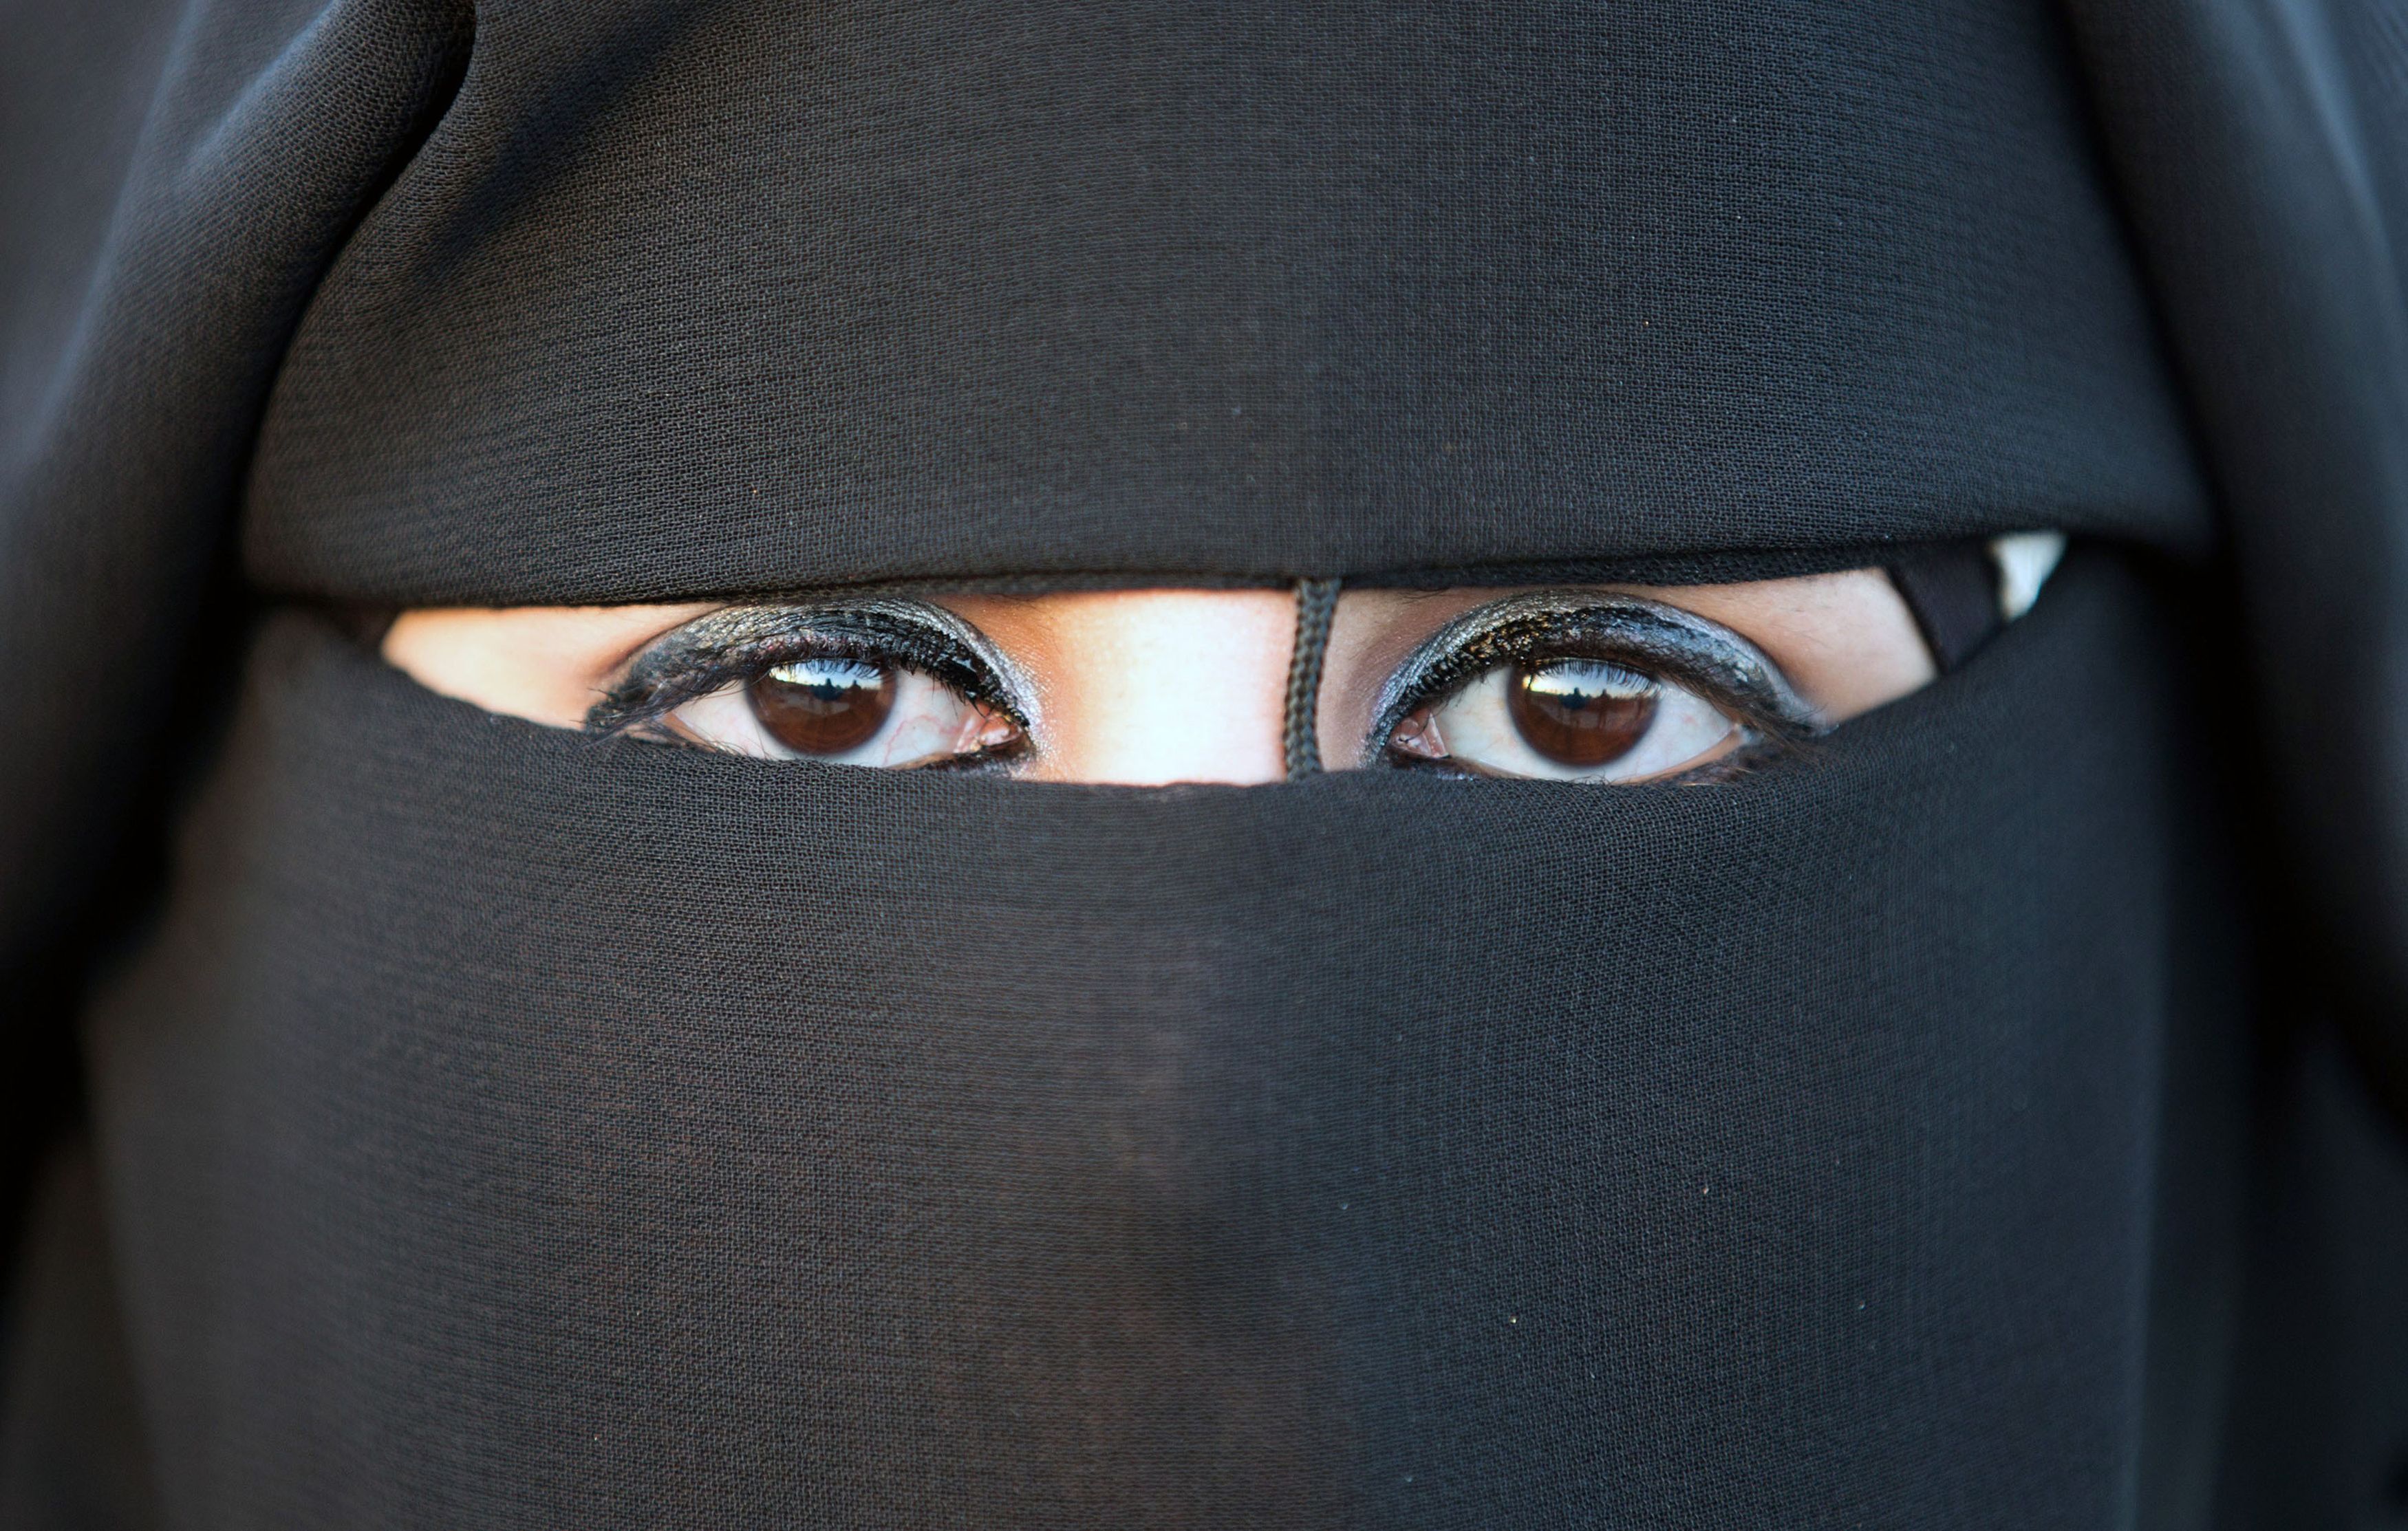 Burqa, hijab, niqab: What's what? | CNN